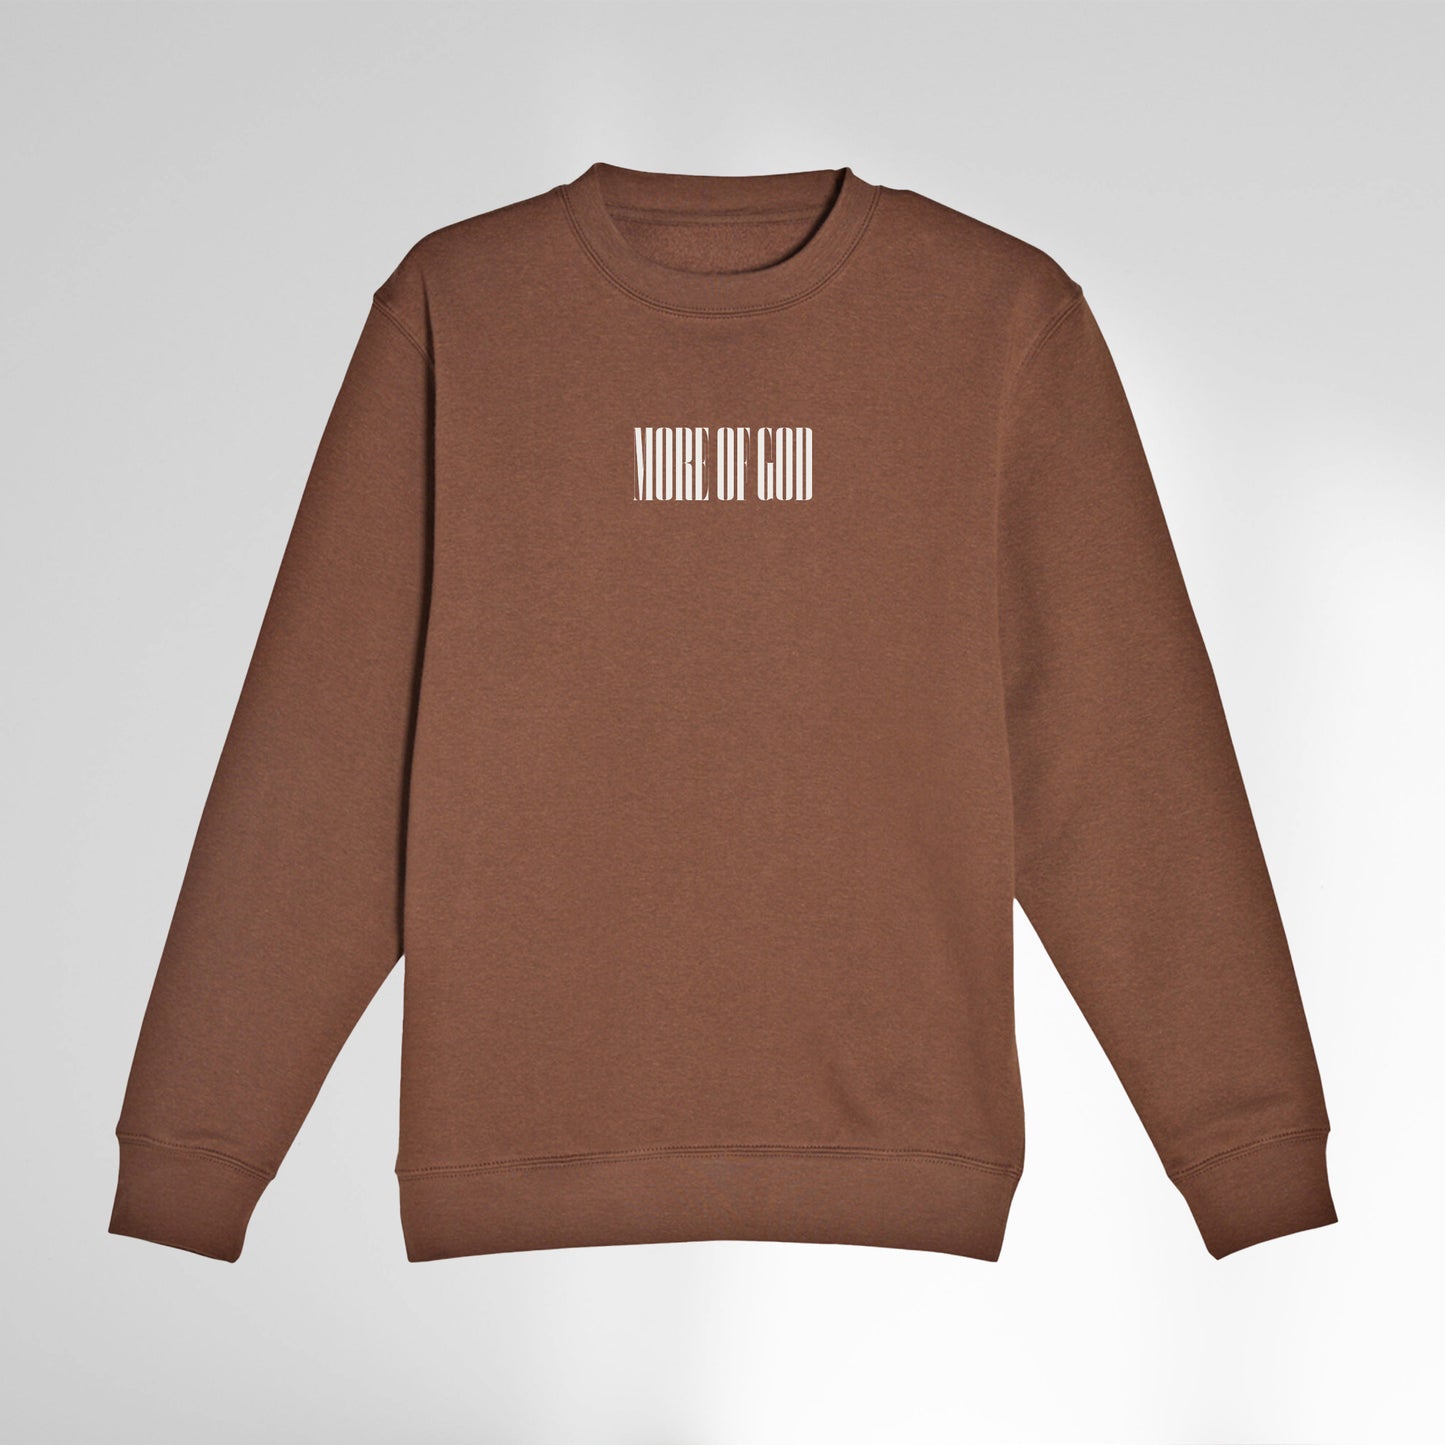 More of God Sweatshirt | Chestnut